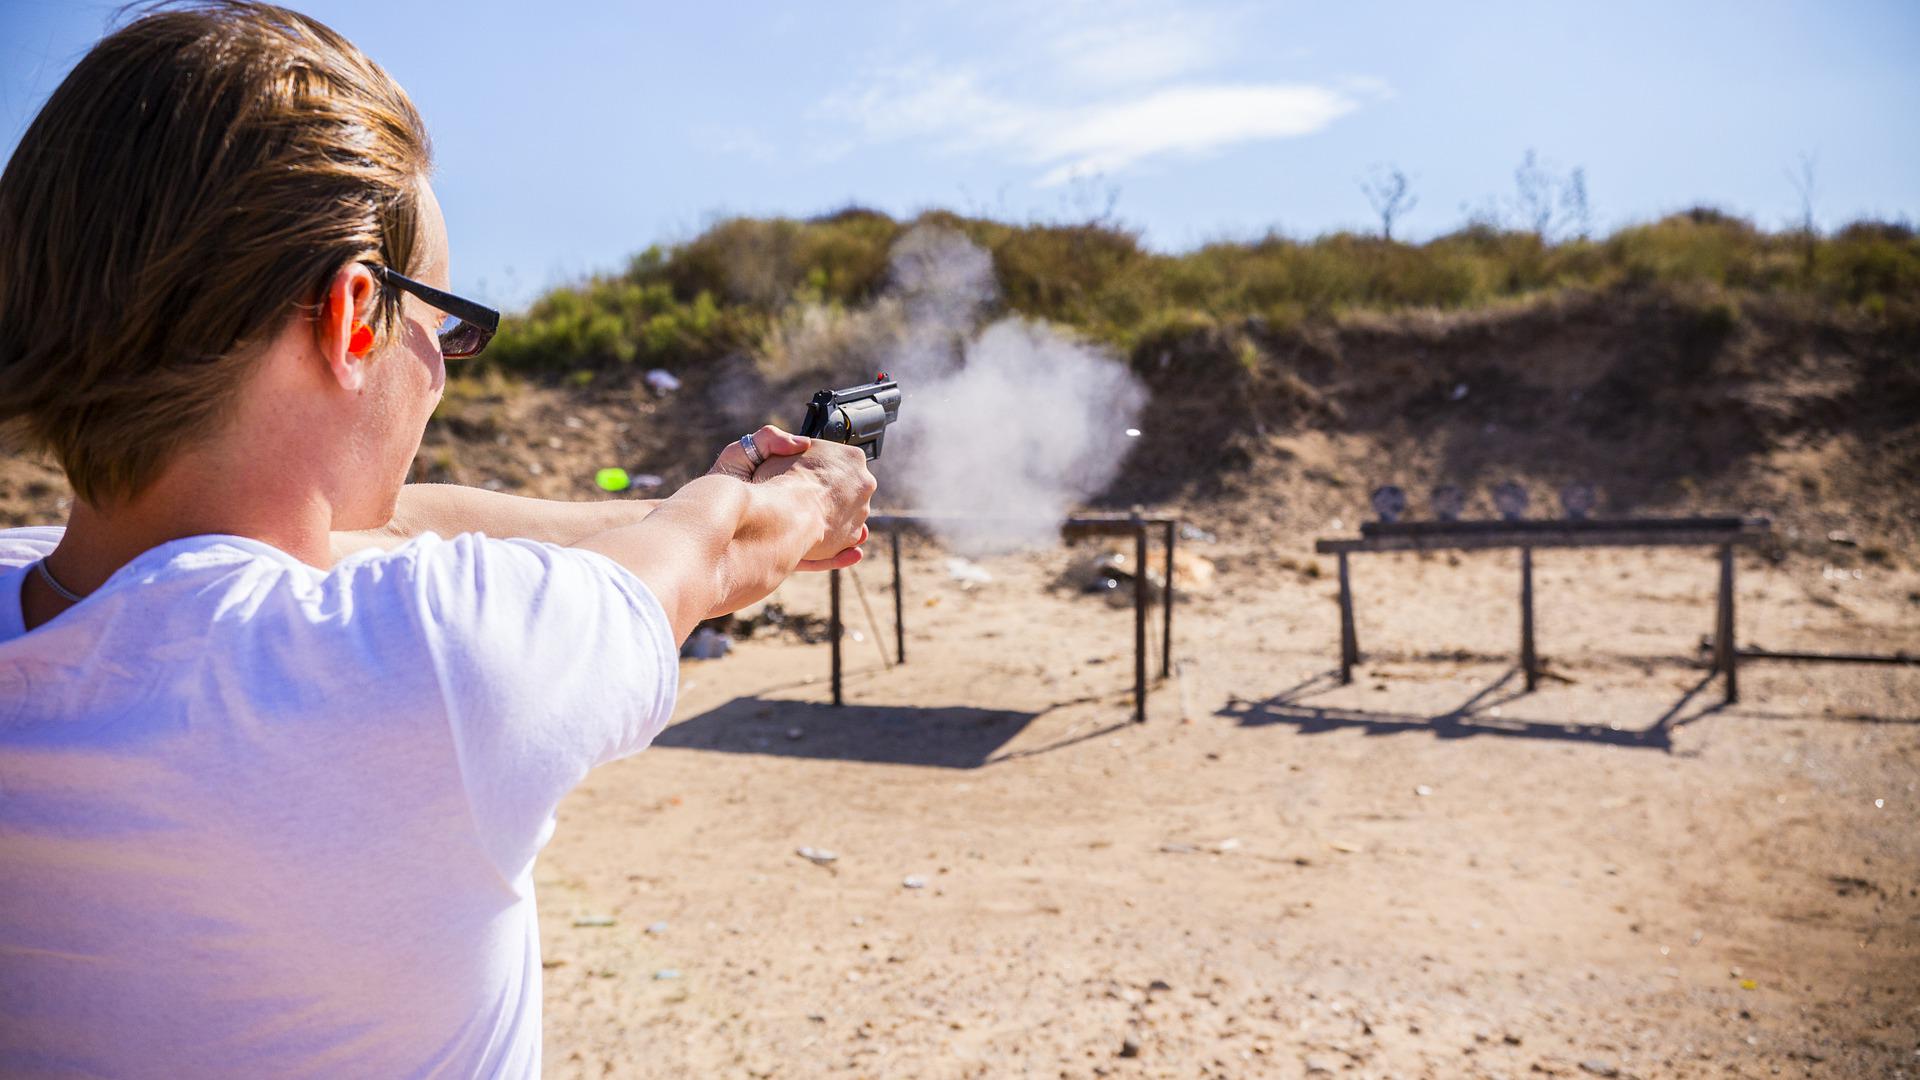 Shooting range – try it